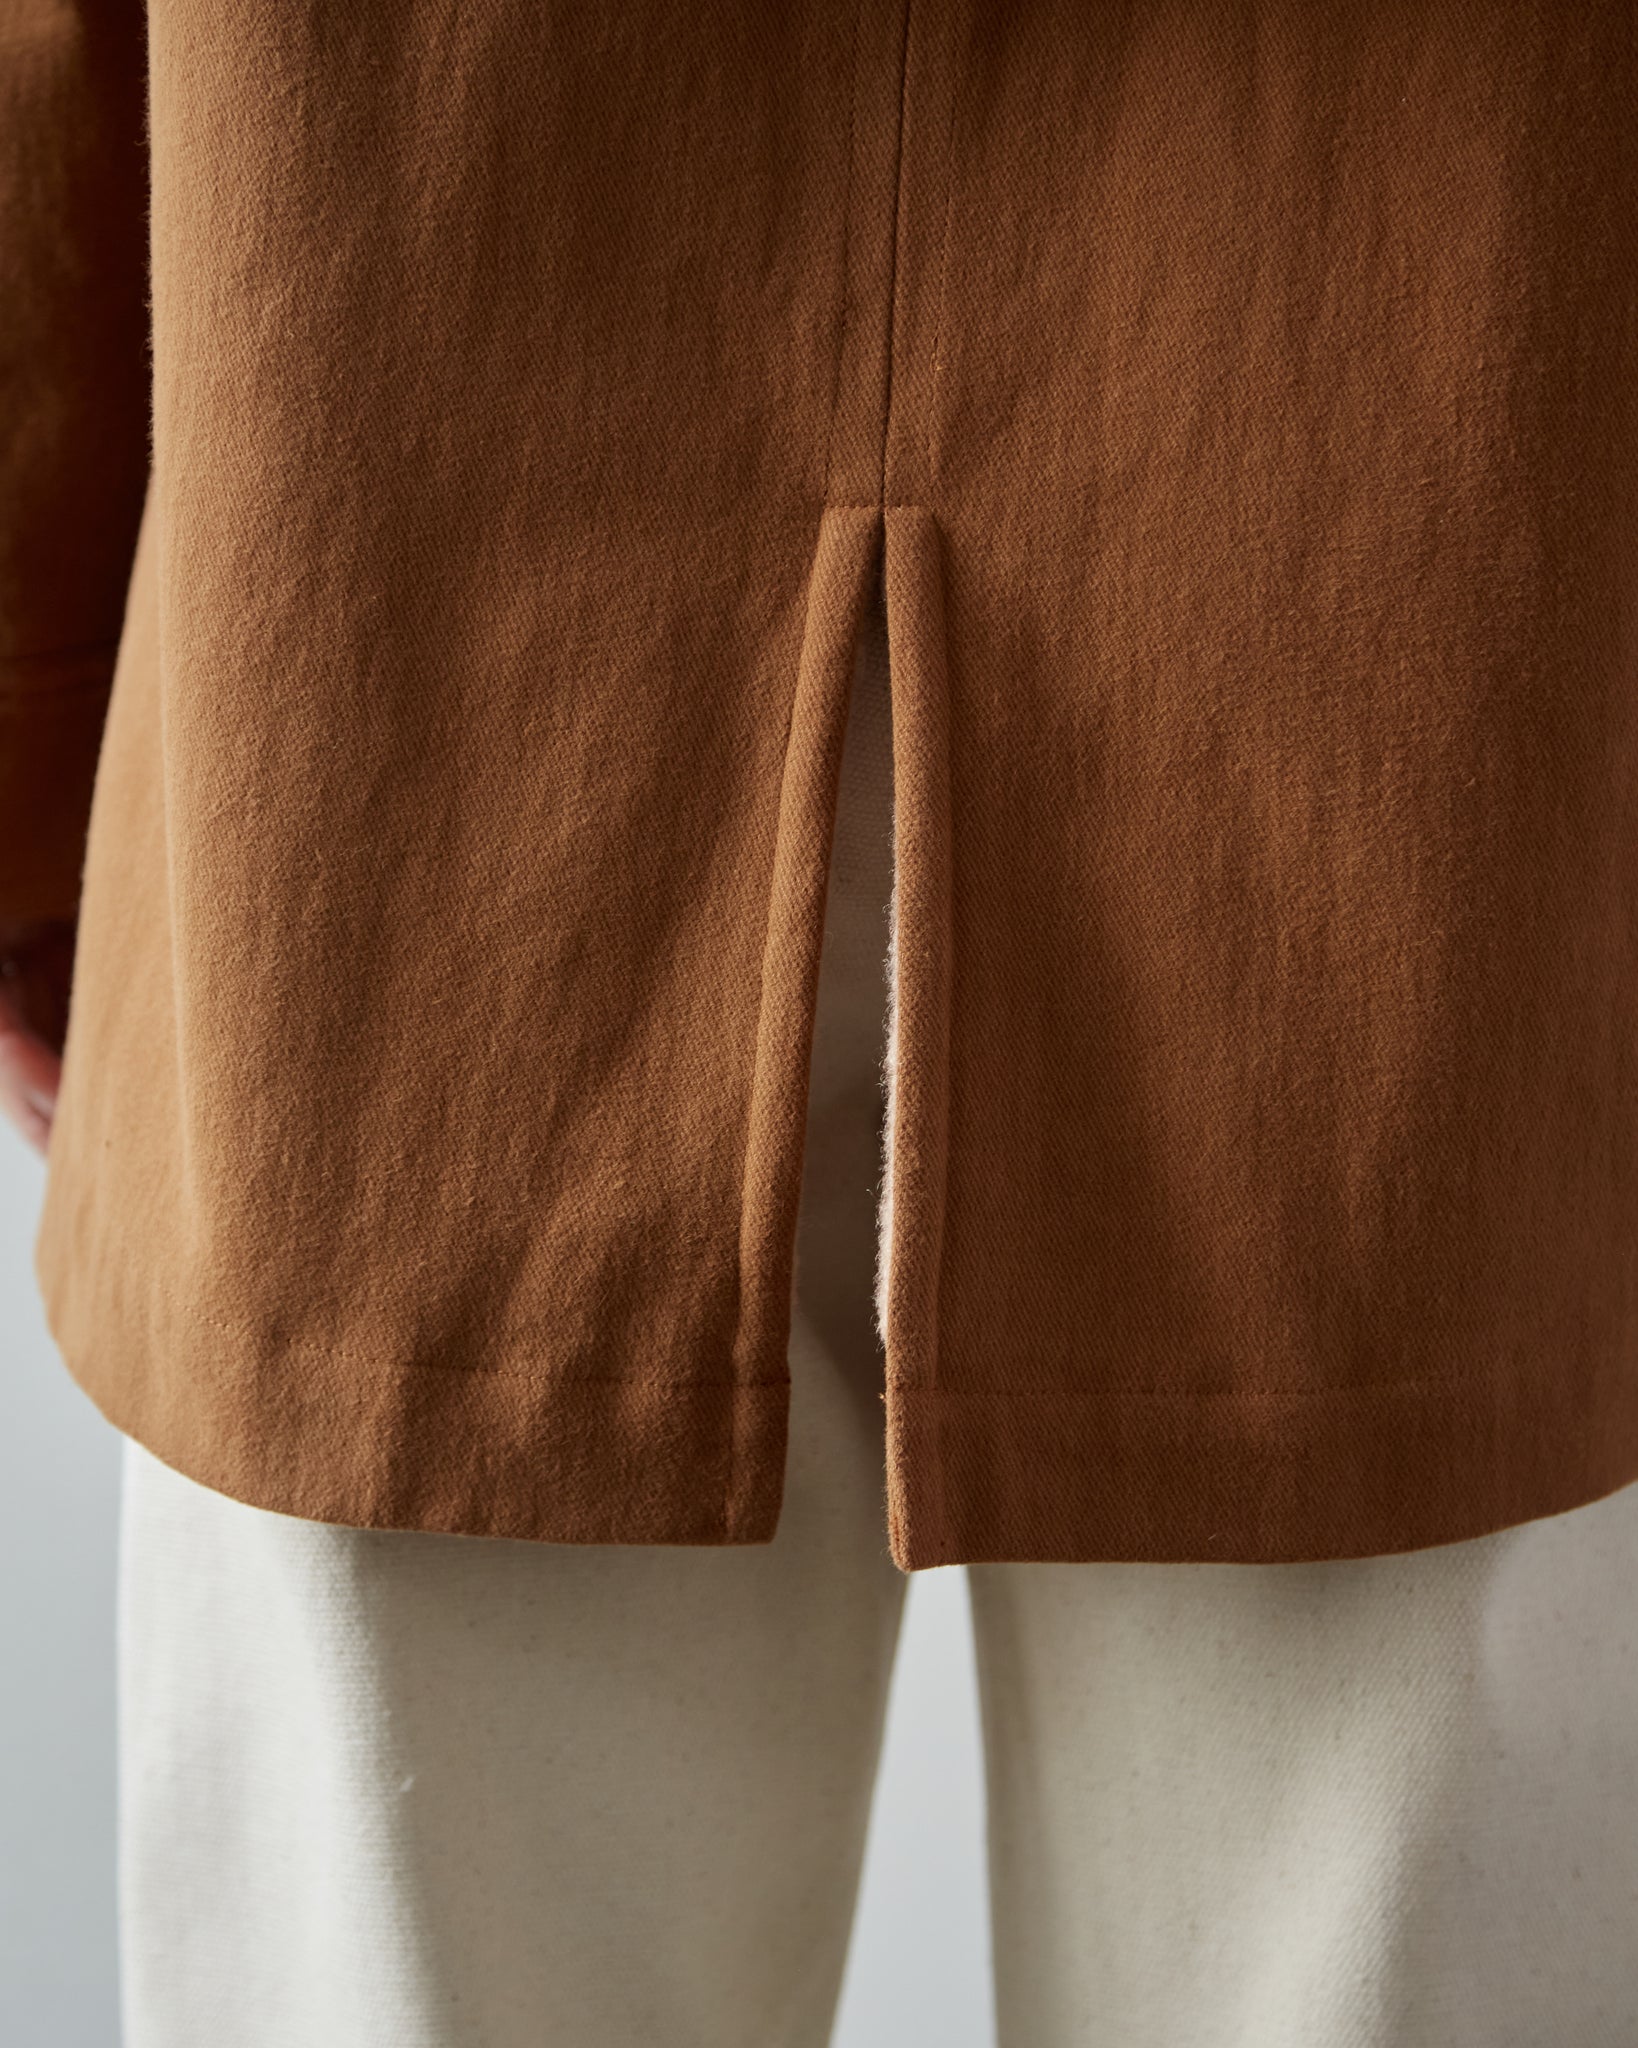 7115 Layered Short Coat, Cinnamon